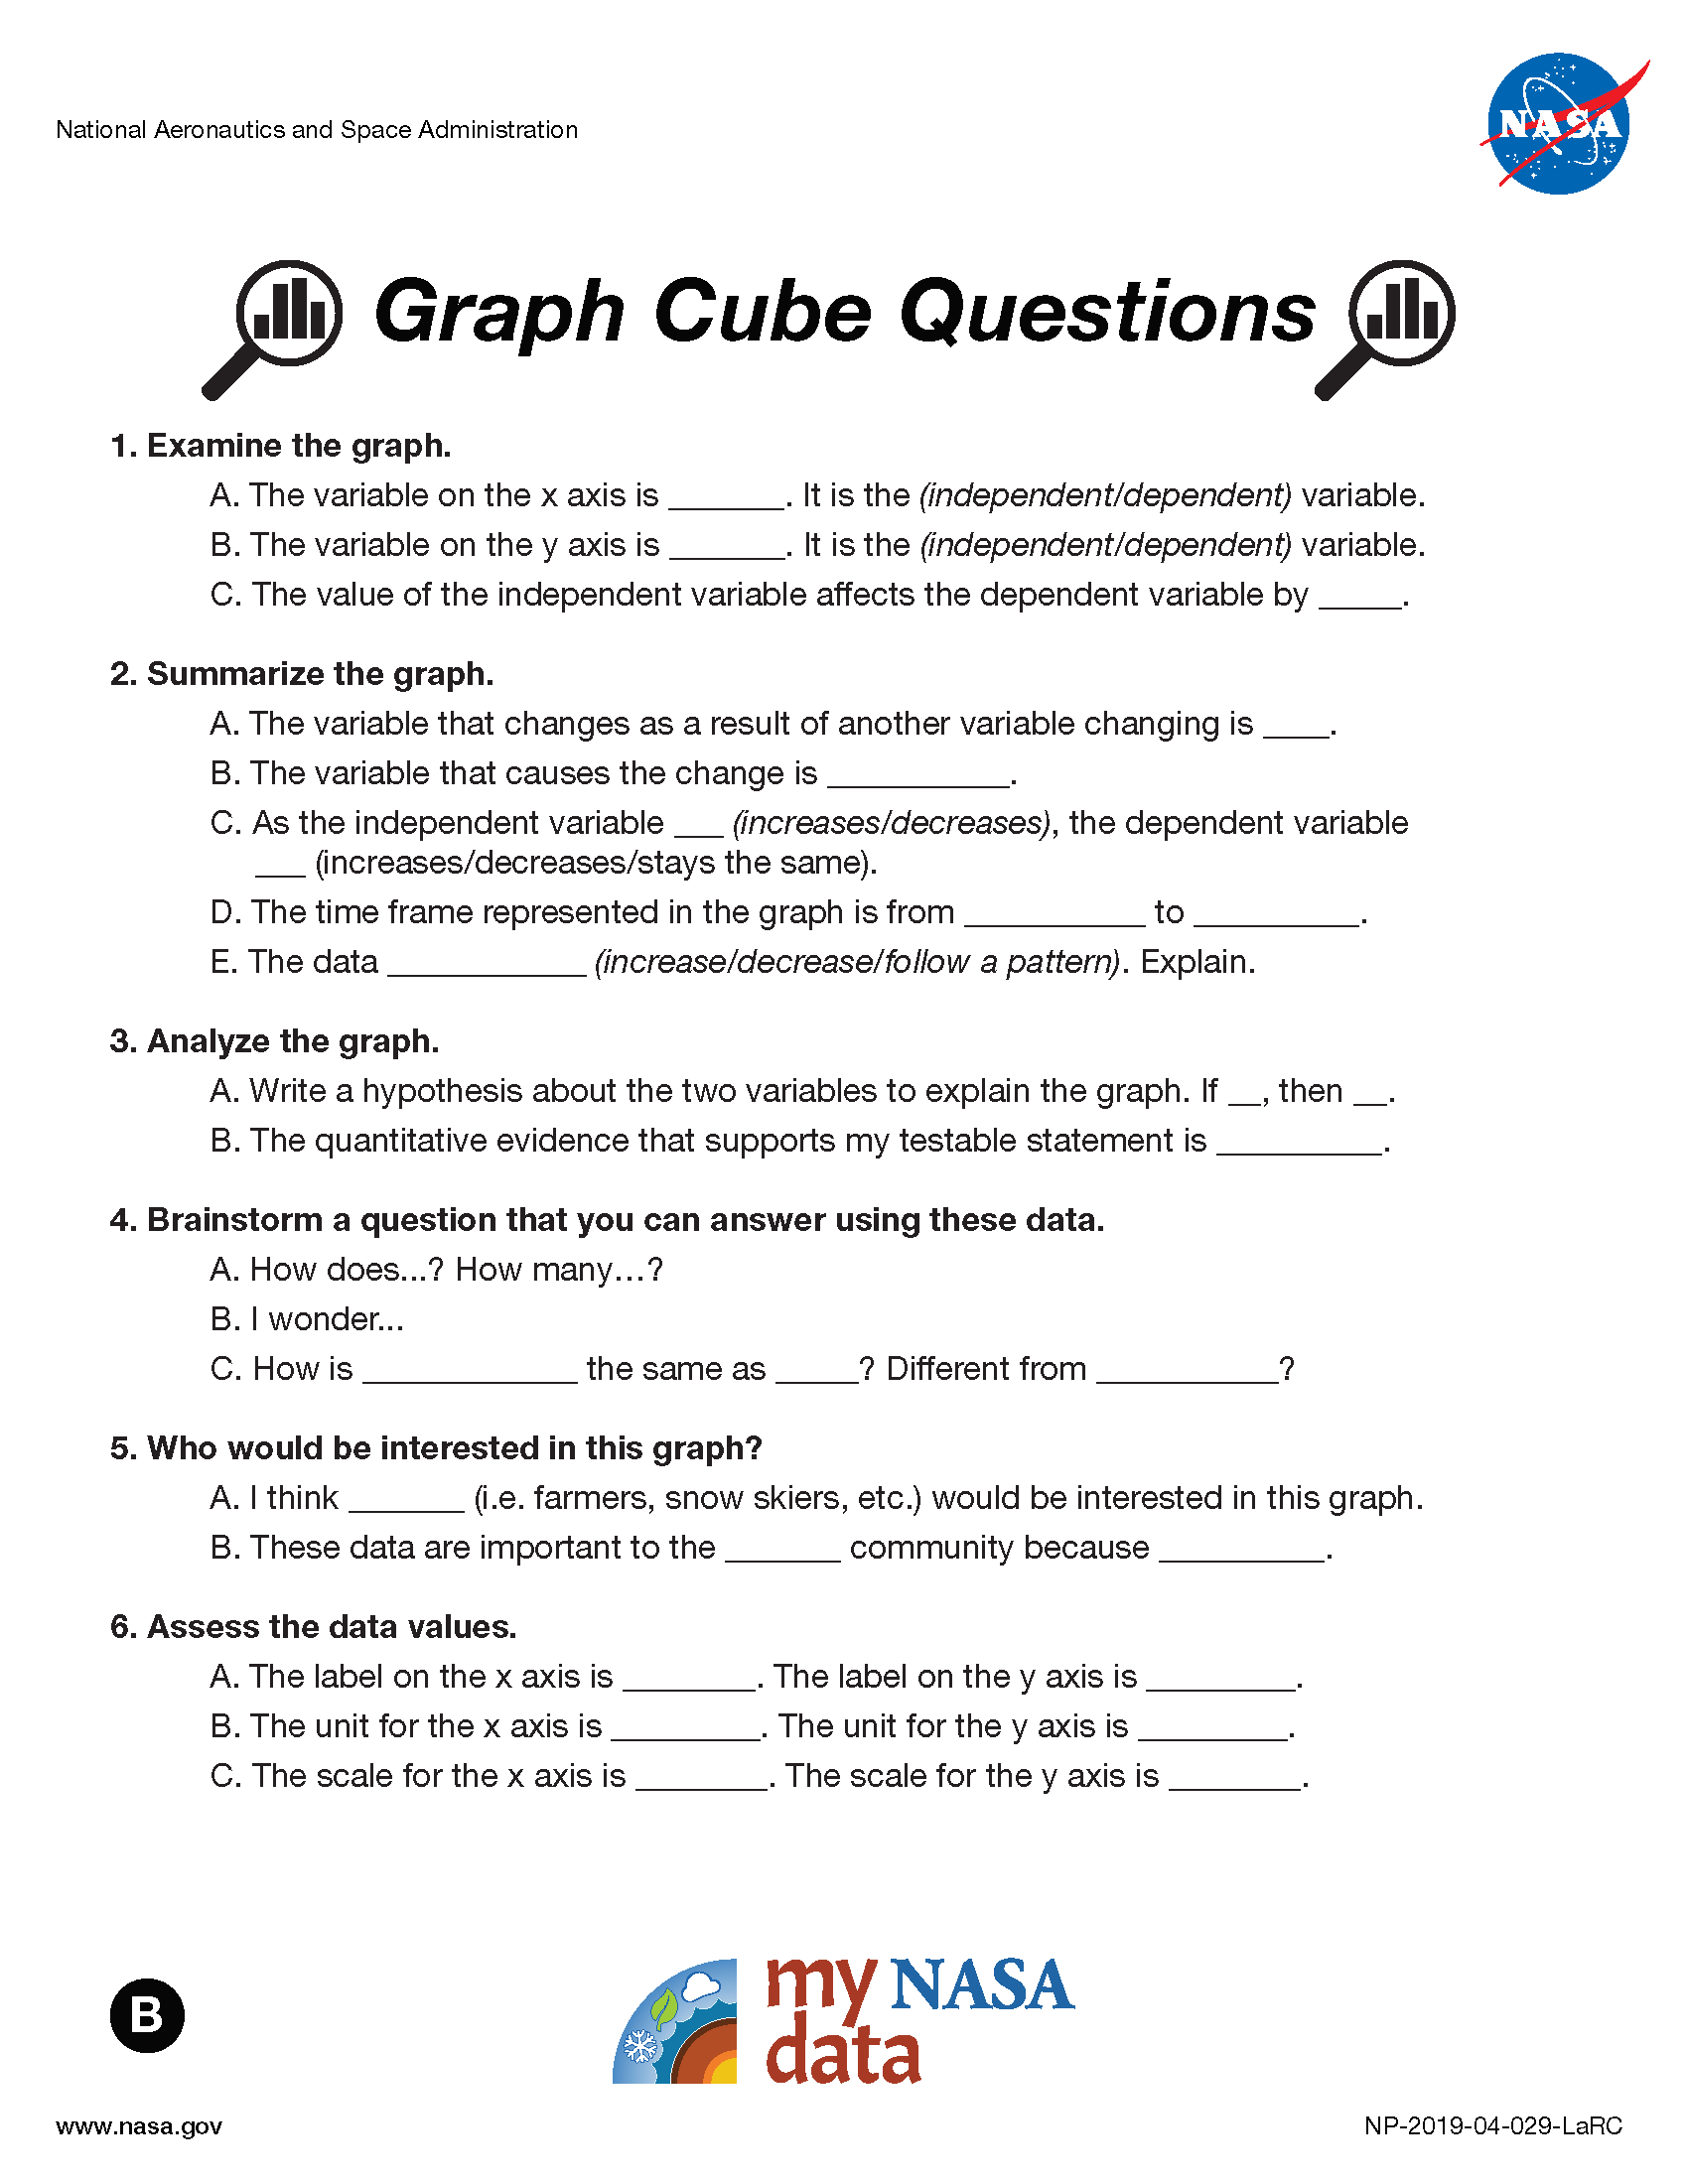 My NASA Data - Data Literacy Cubes - Graph Cube Questions - Intermediate